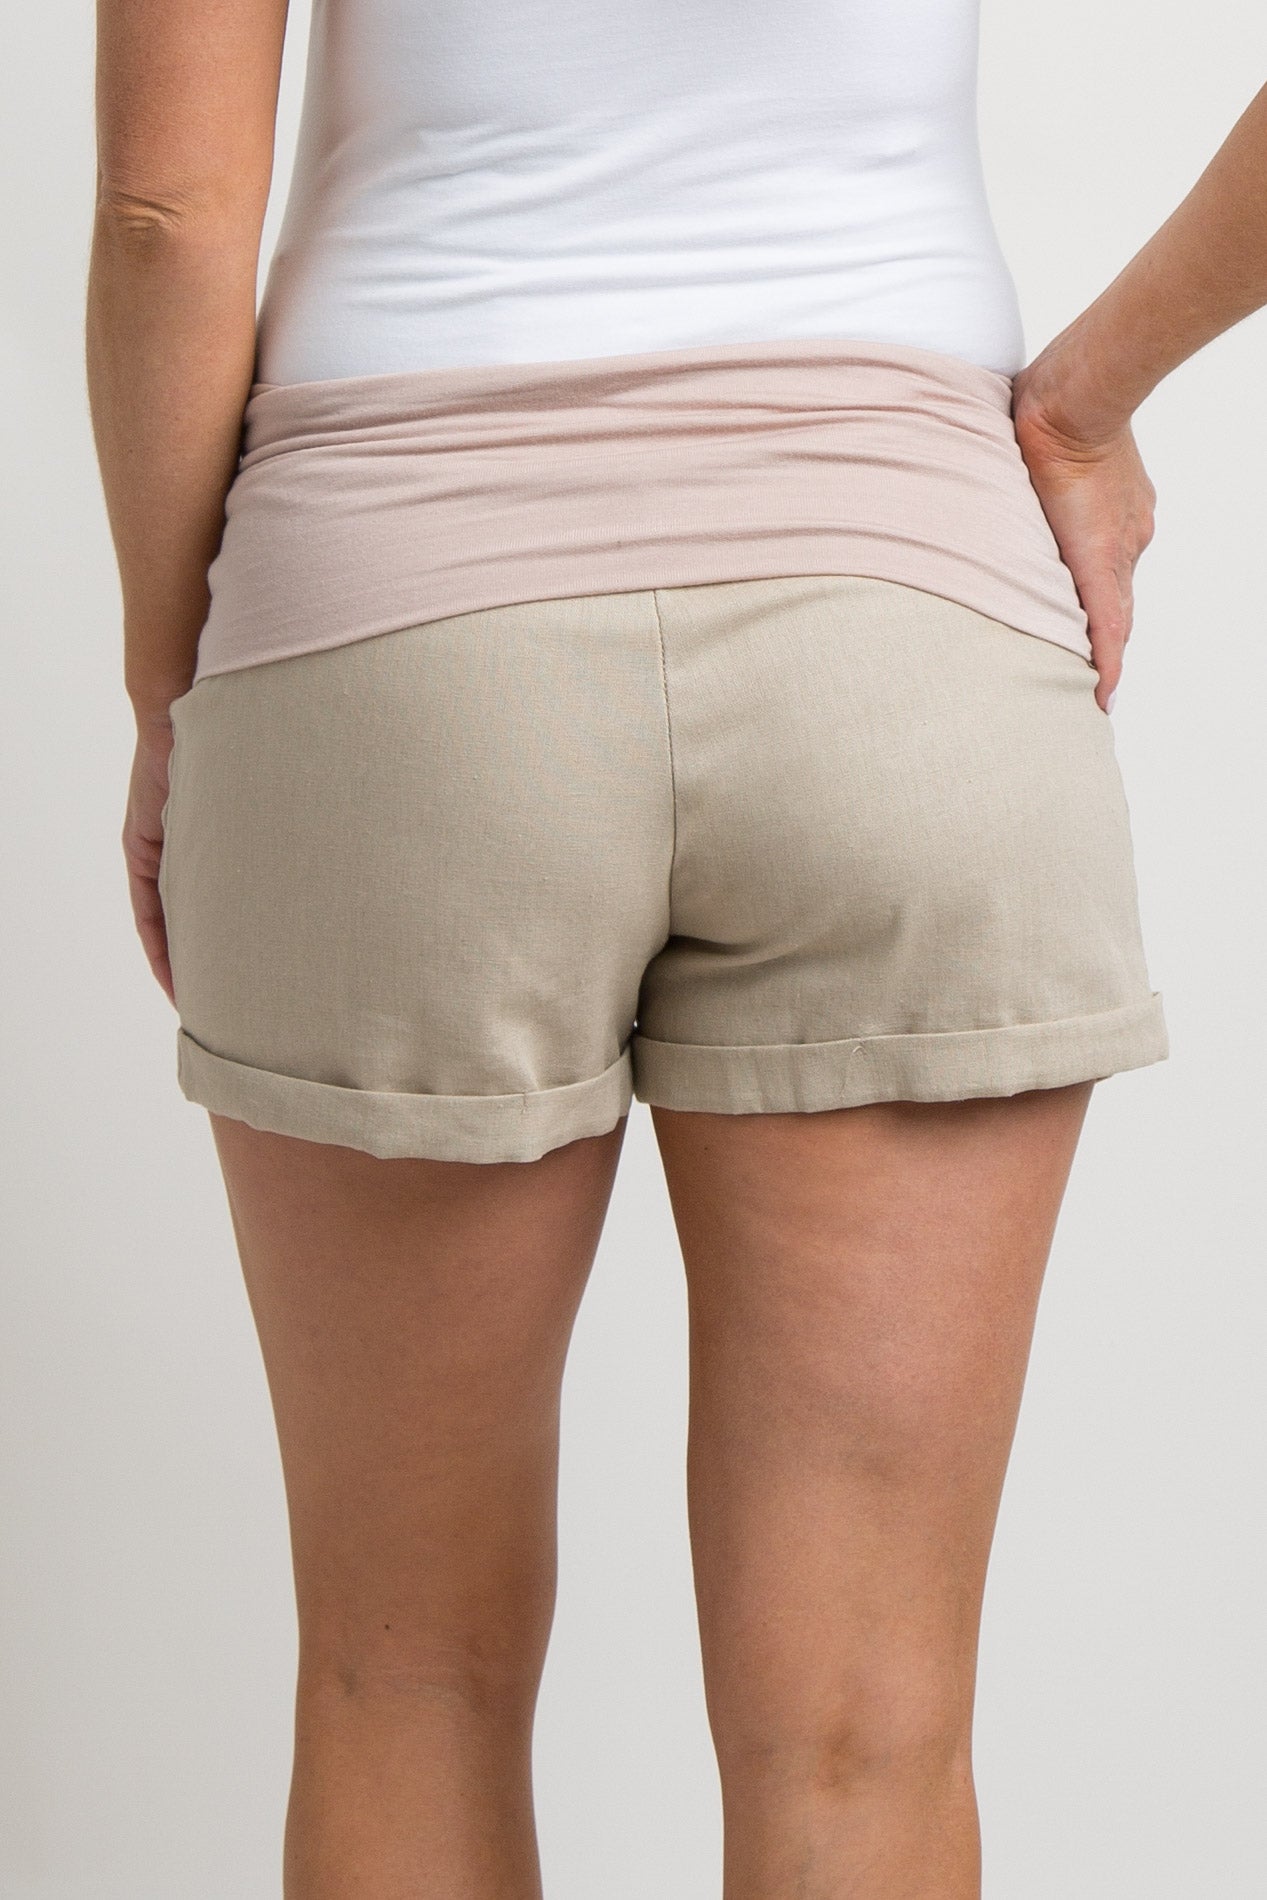 Taupe Foldover Linen Maternity Shorts